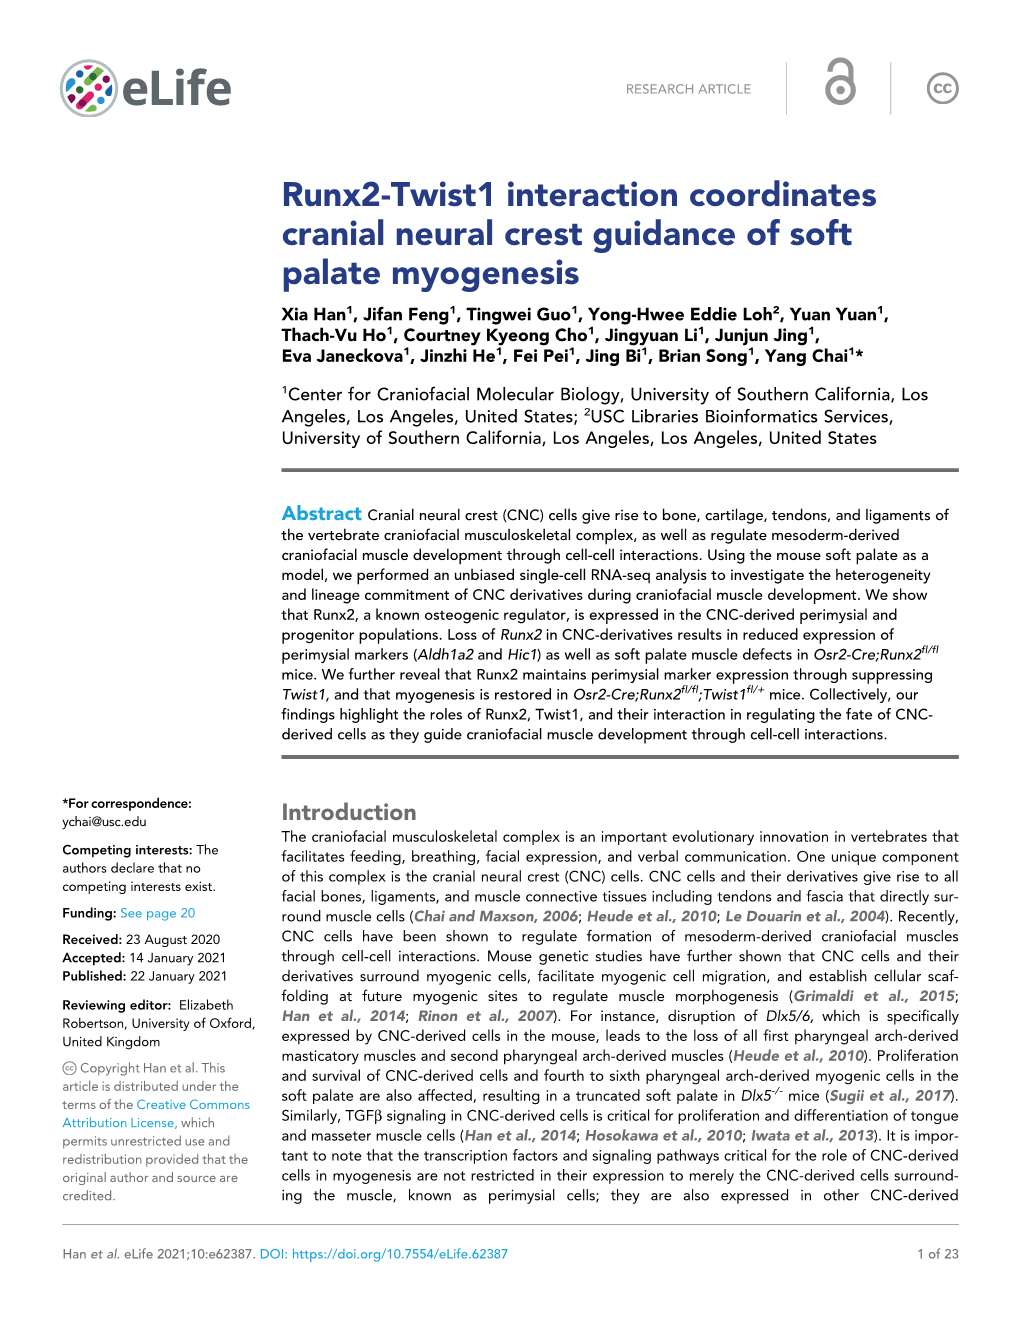 Runx2-Twist1 Interaction Coordinates Cranial Neural Crest Guidance of Soft Palate Myogenesis